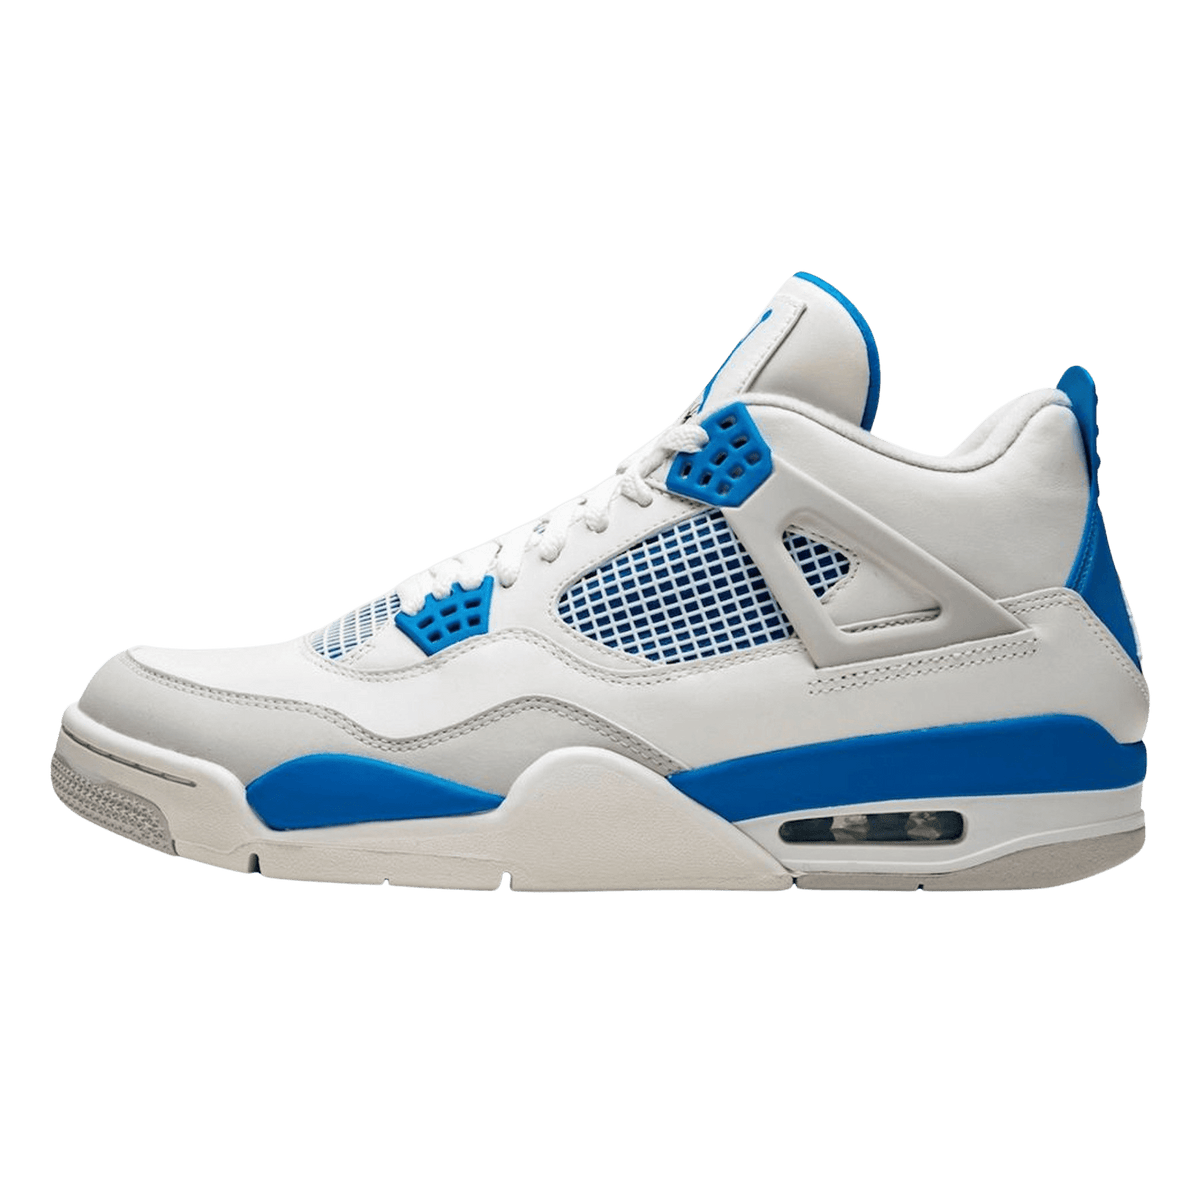 Air Michael Jordan 4 Retro White & Military Blue - Kick Basketball